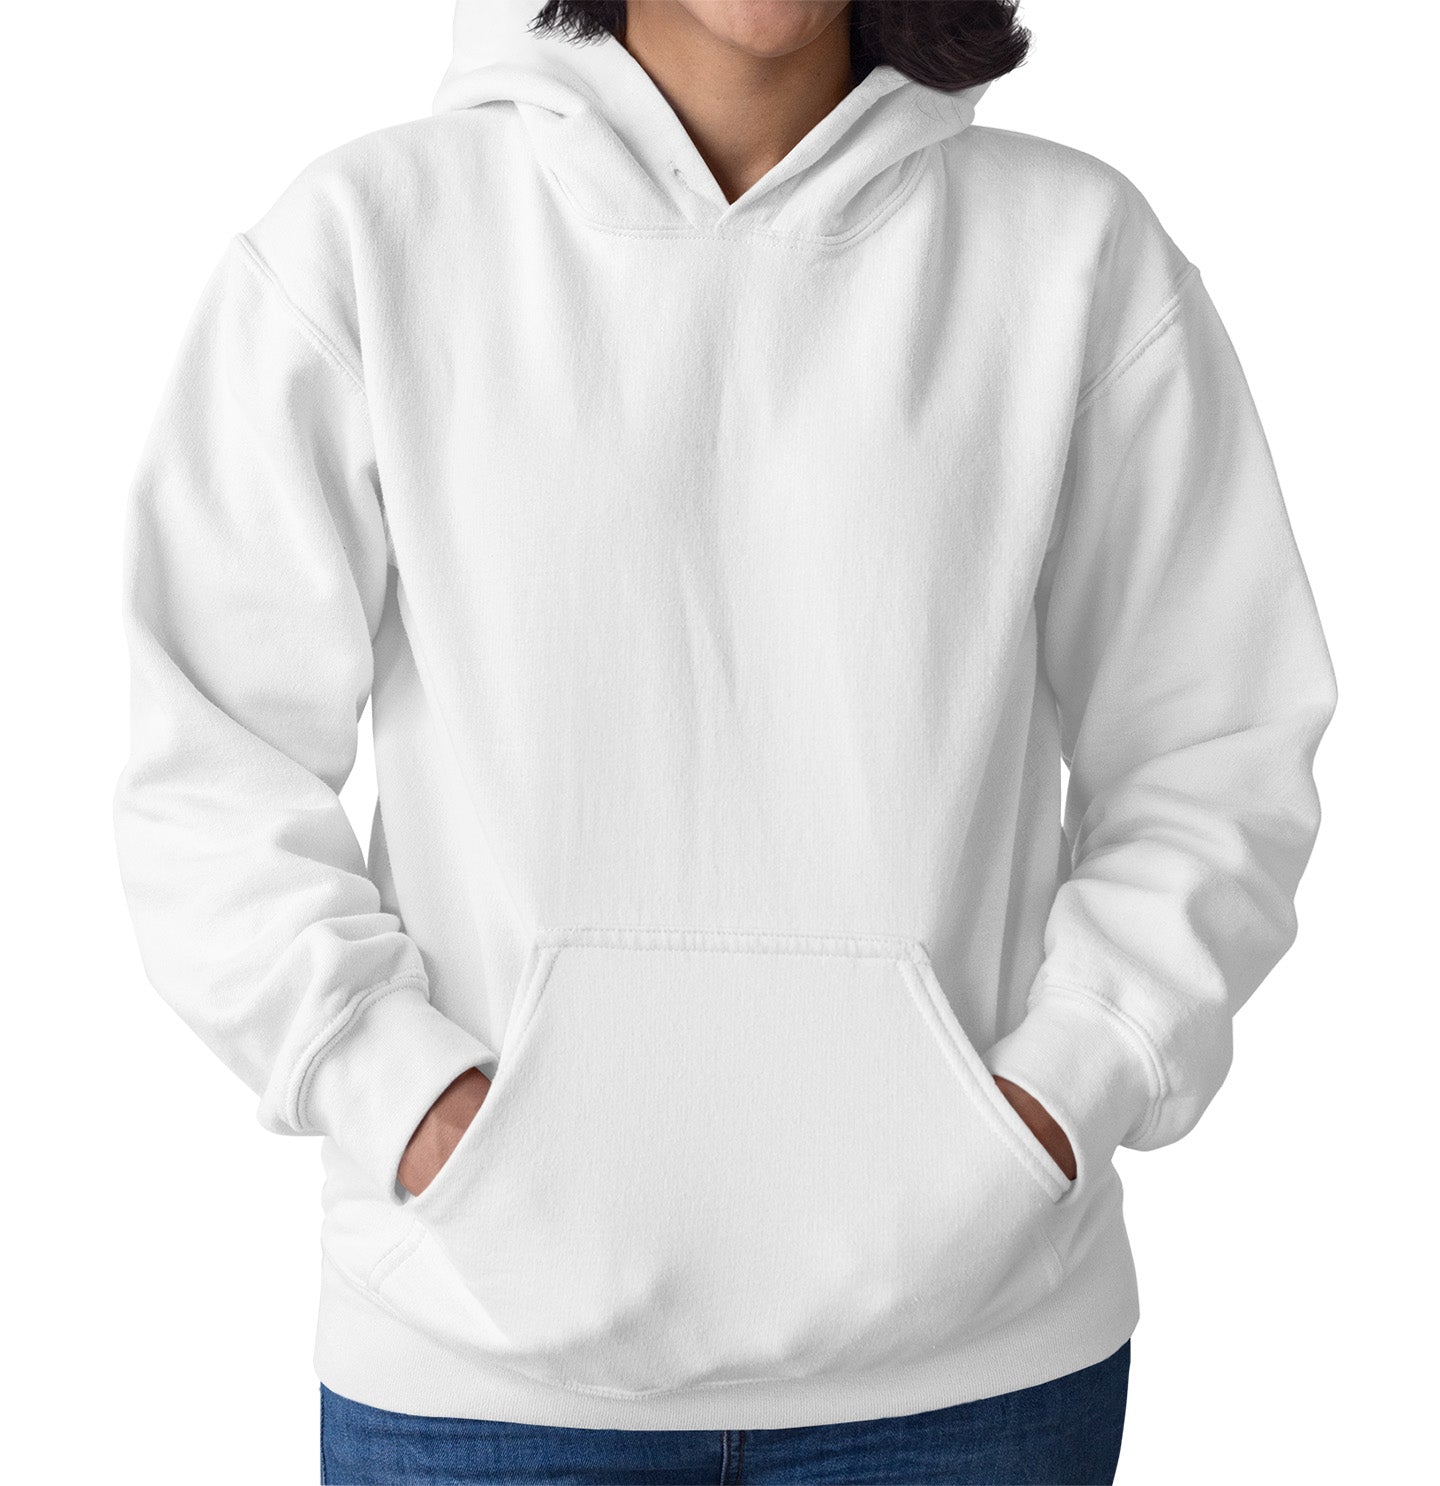 Golden Mom Paw Text - Personalized Custom Adult Unisex Hoodie Sweatshirt